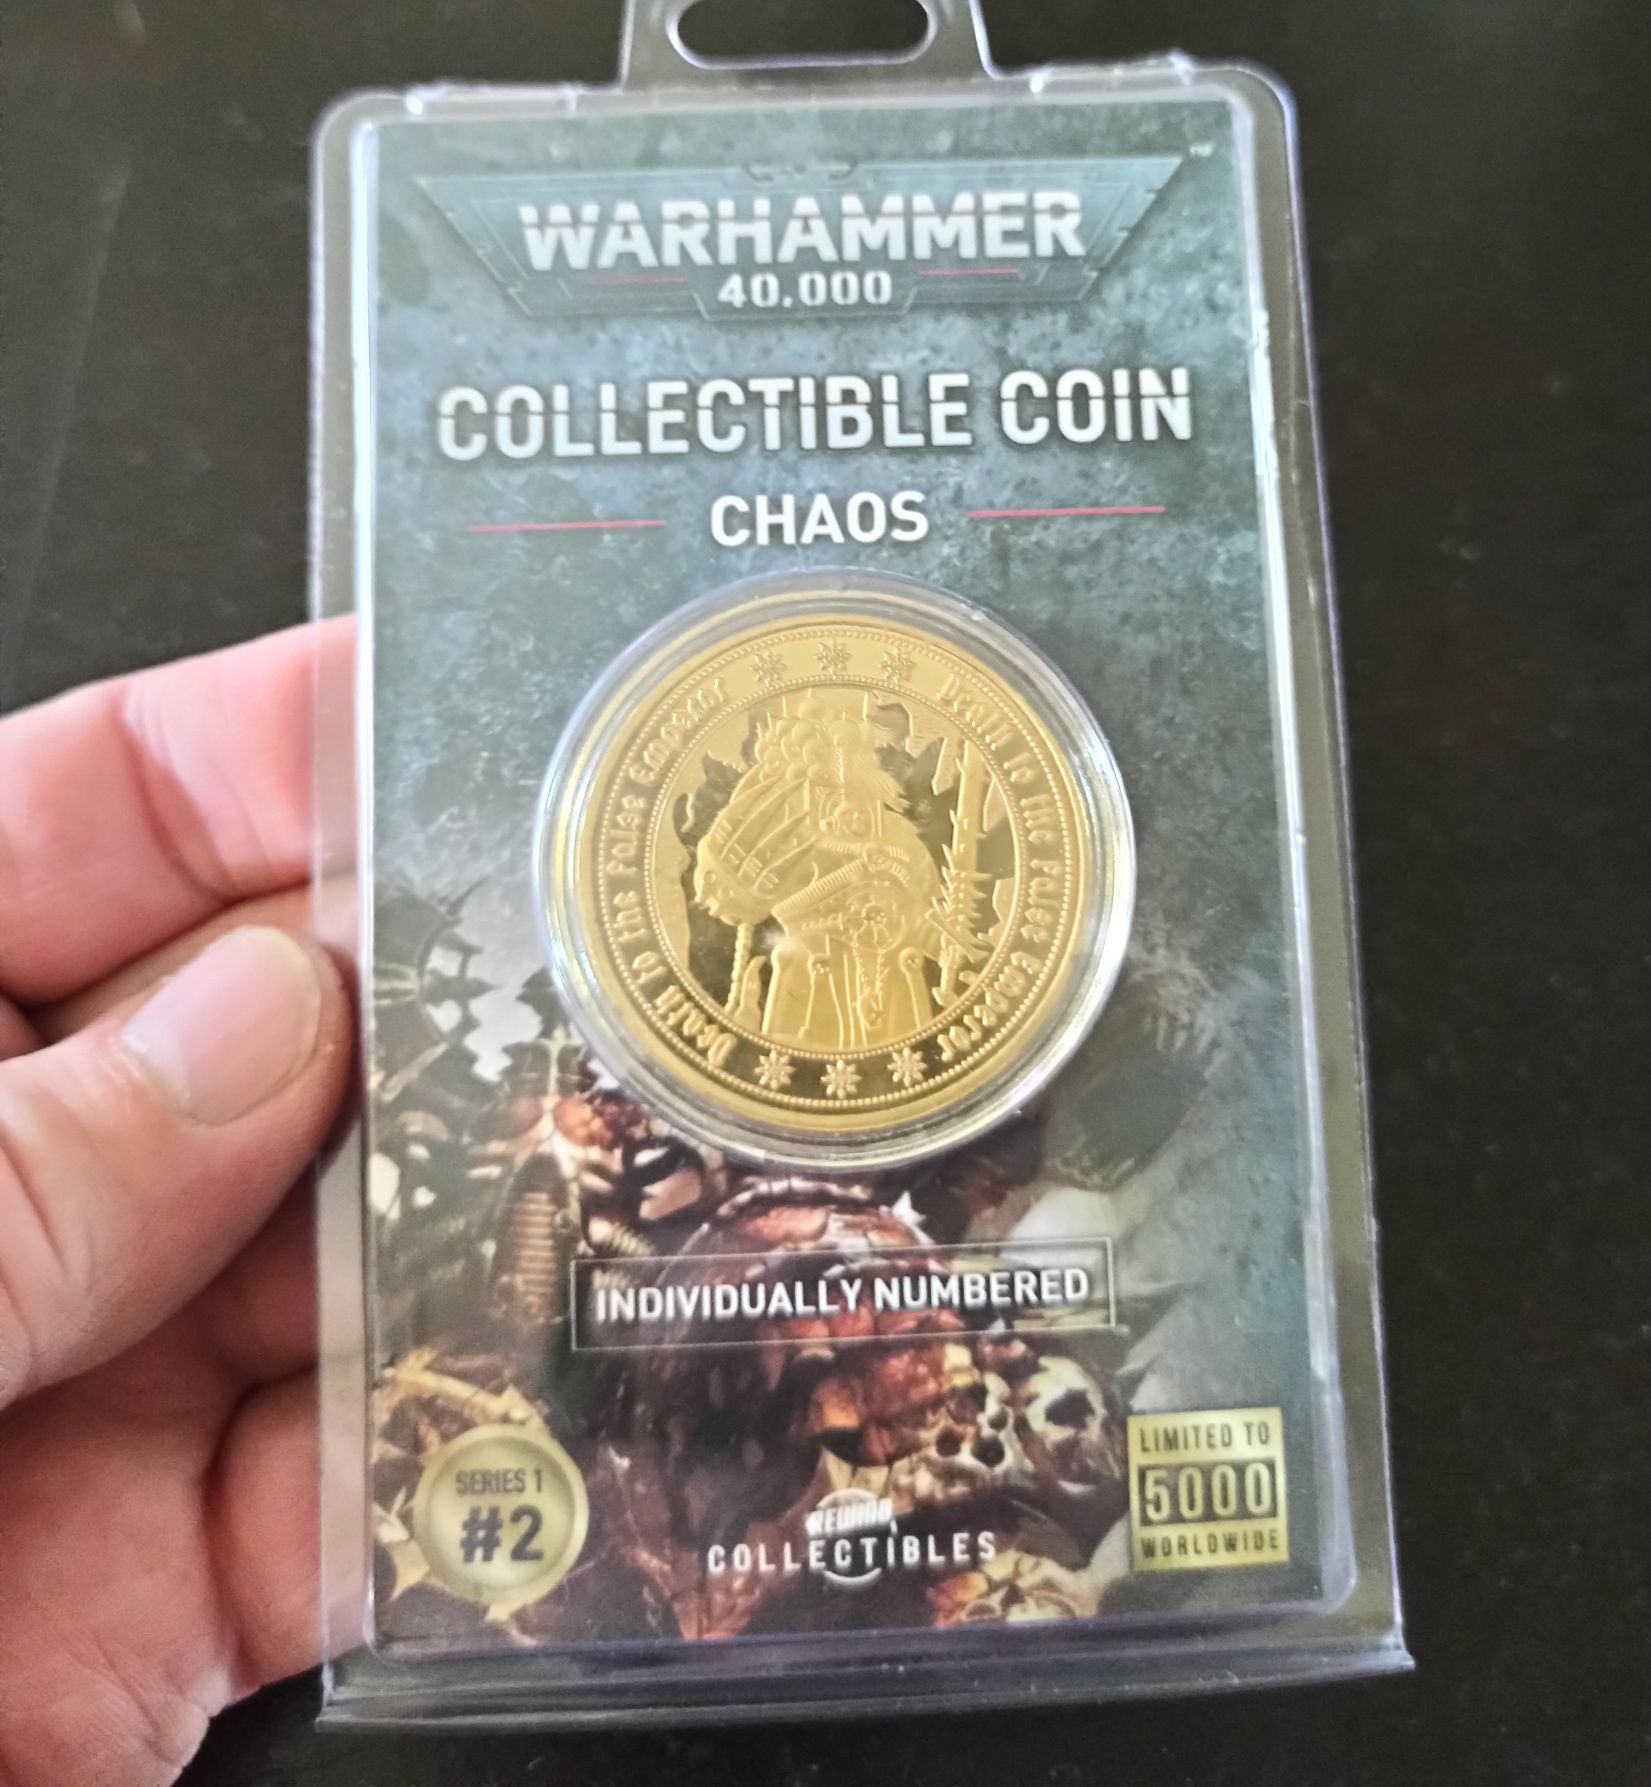 Warhammer 40k coin moneta, okolicznościowa